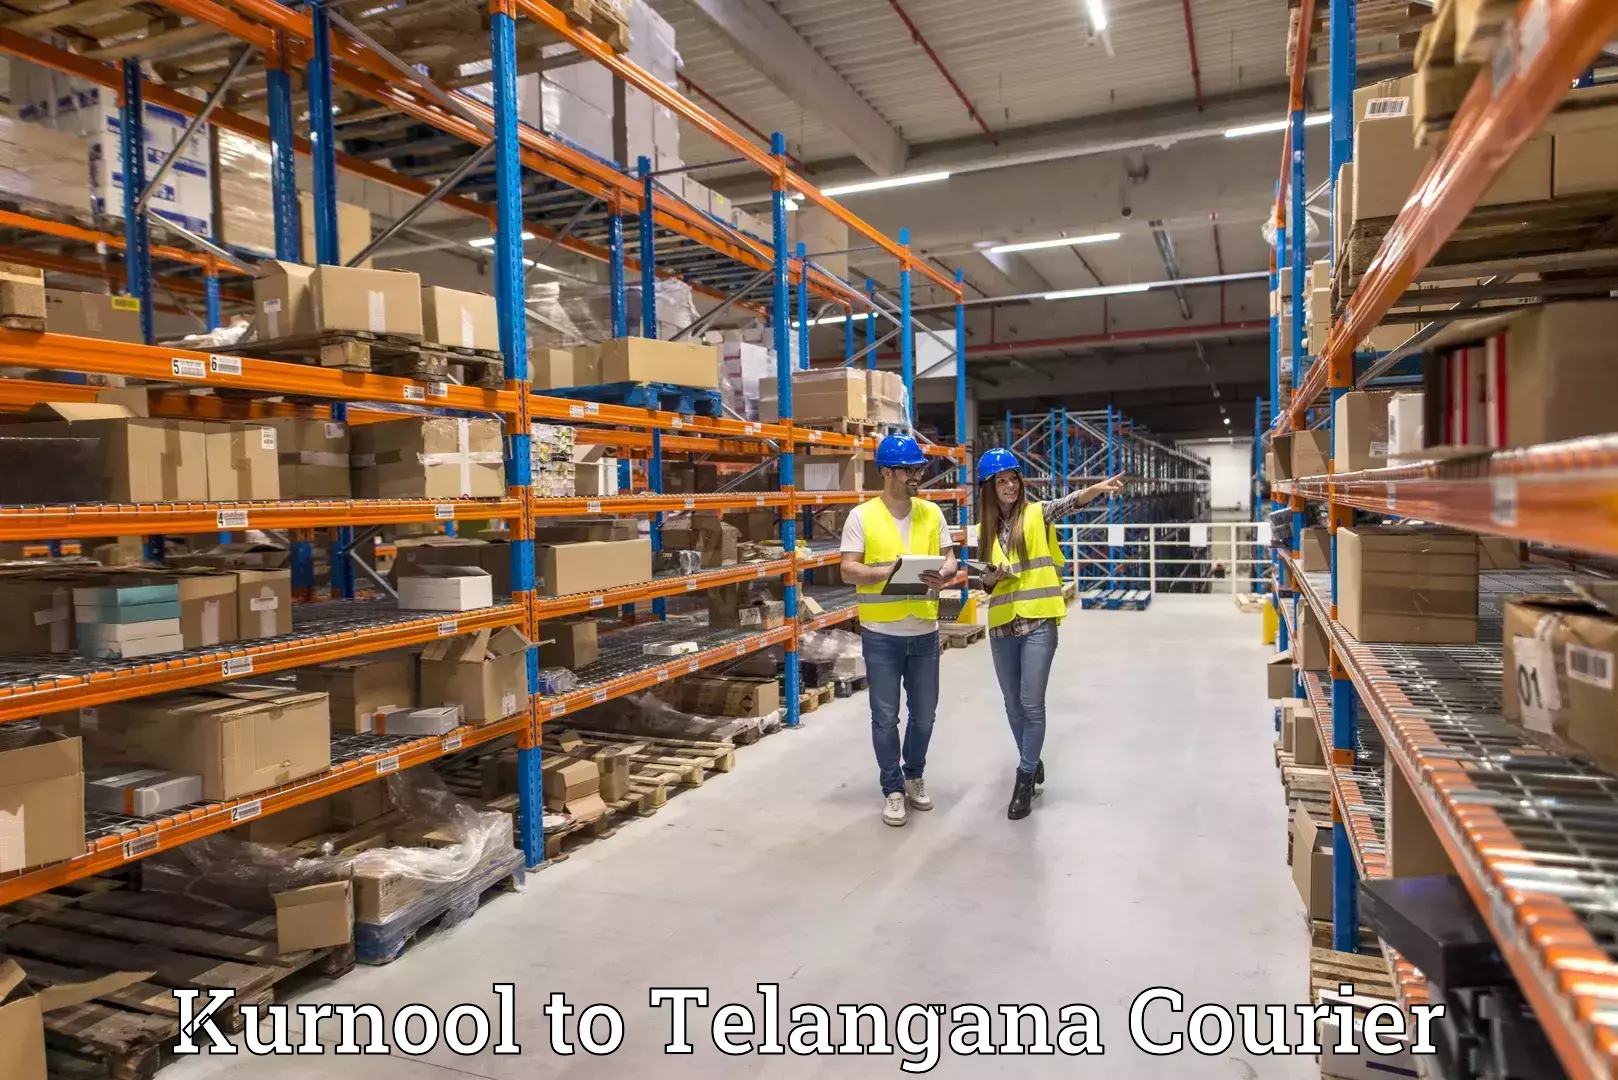 Courier rate comparison Kurnool to Telangana